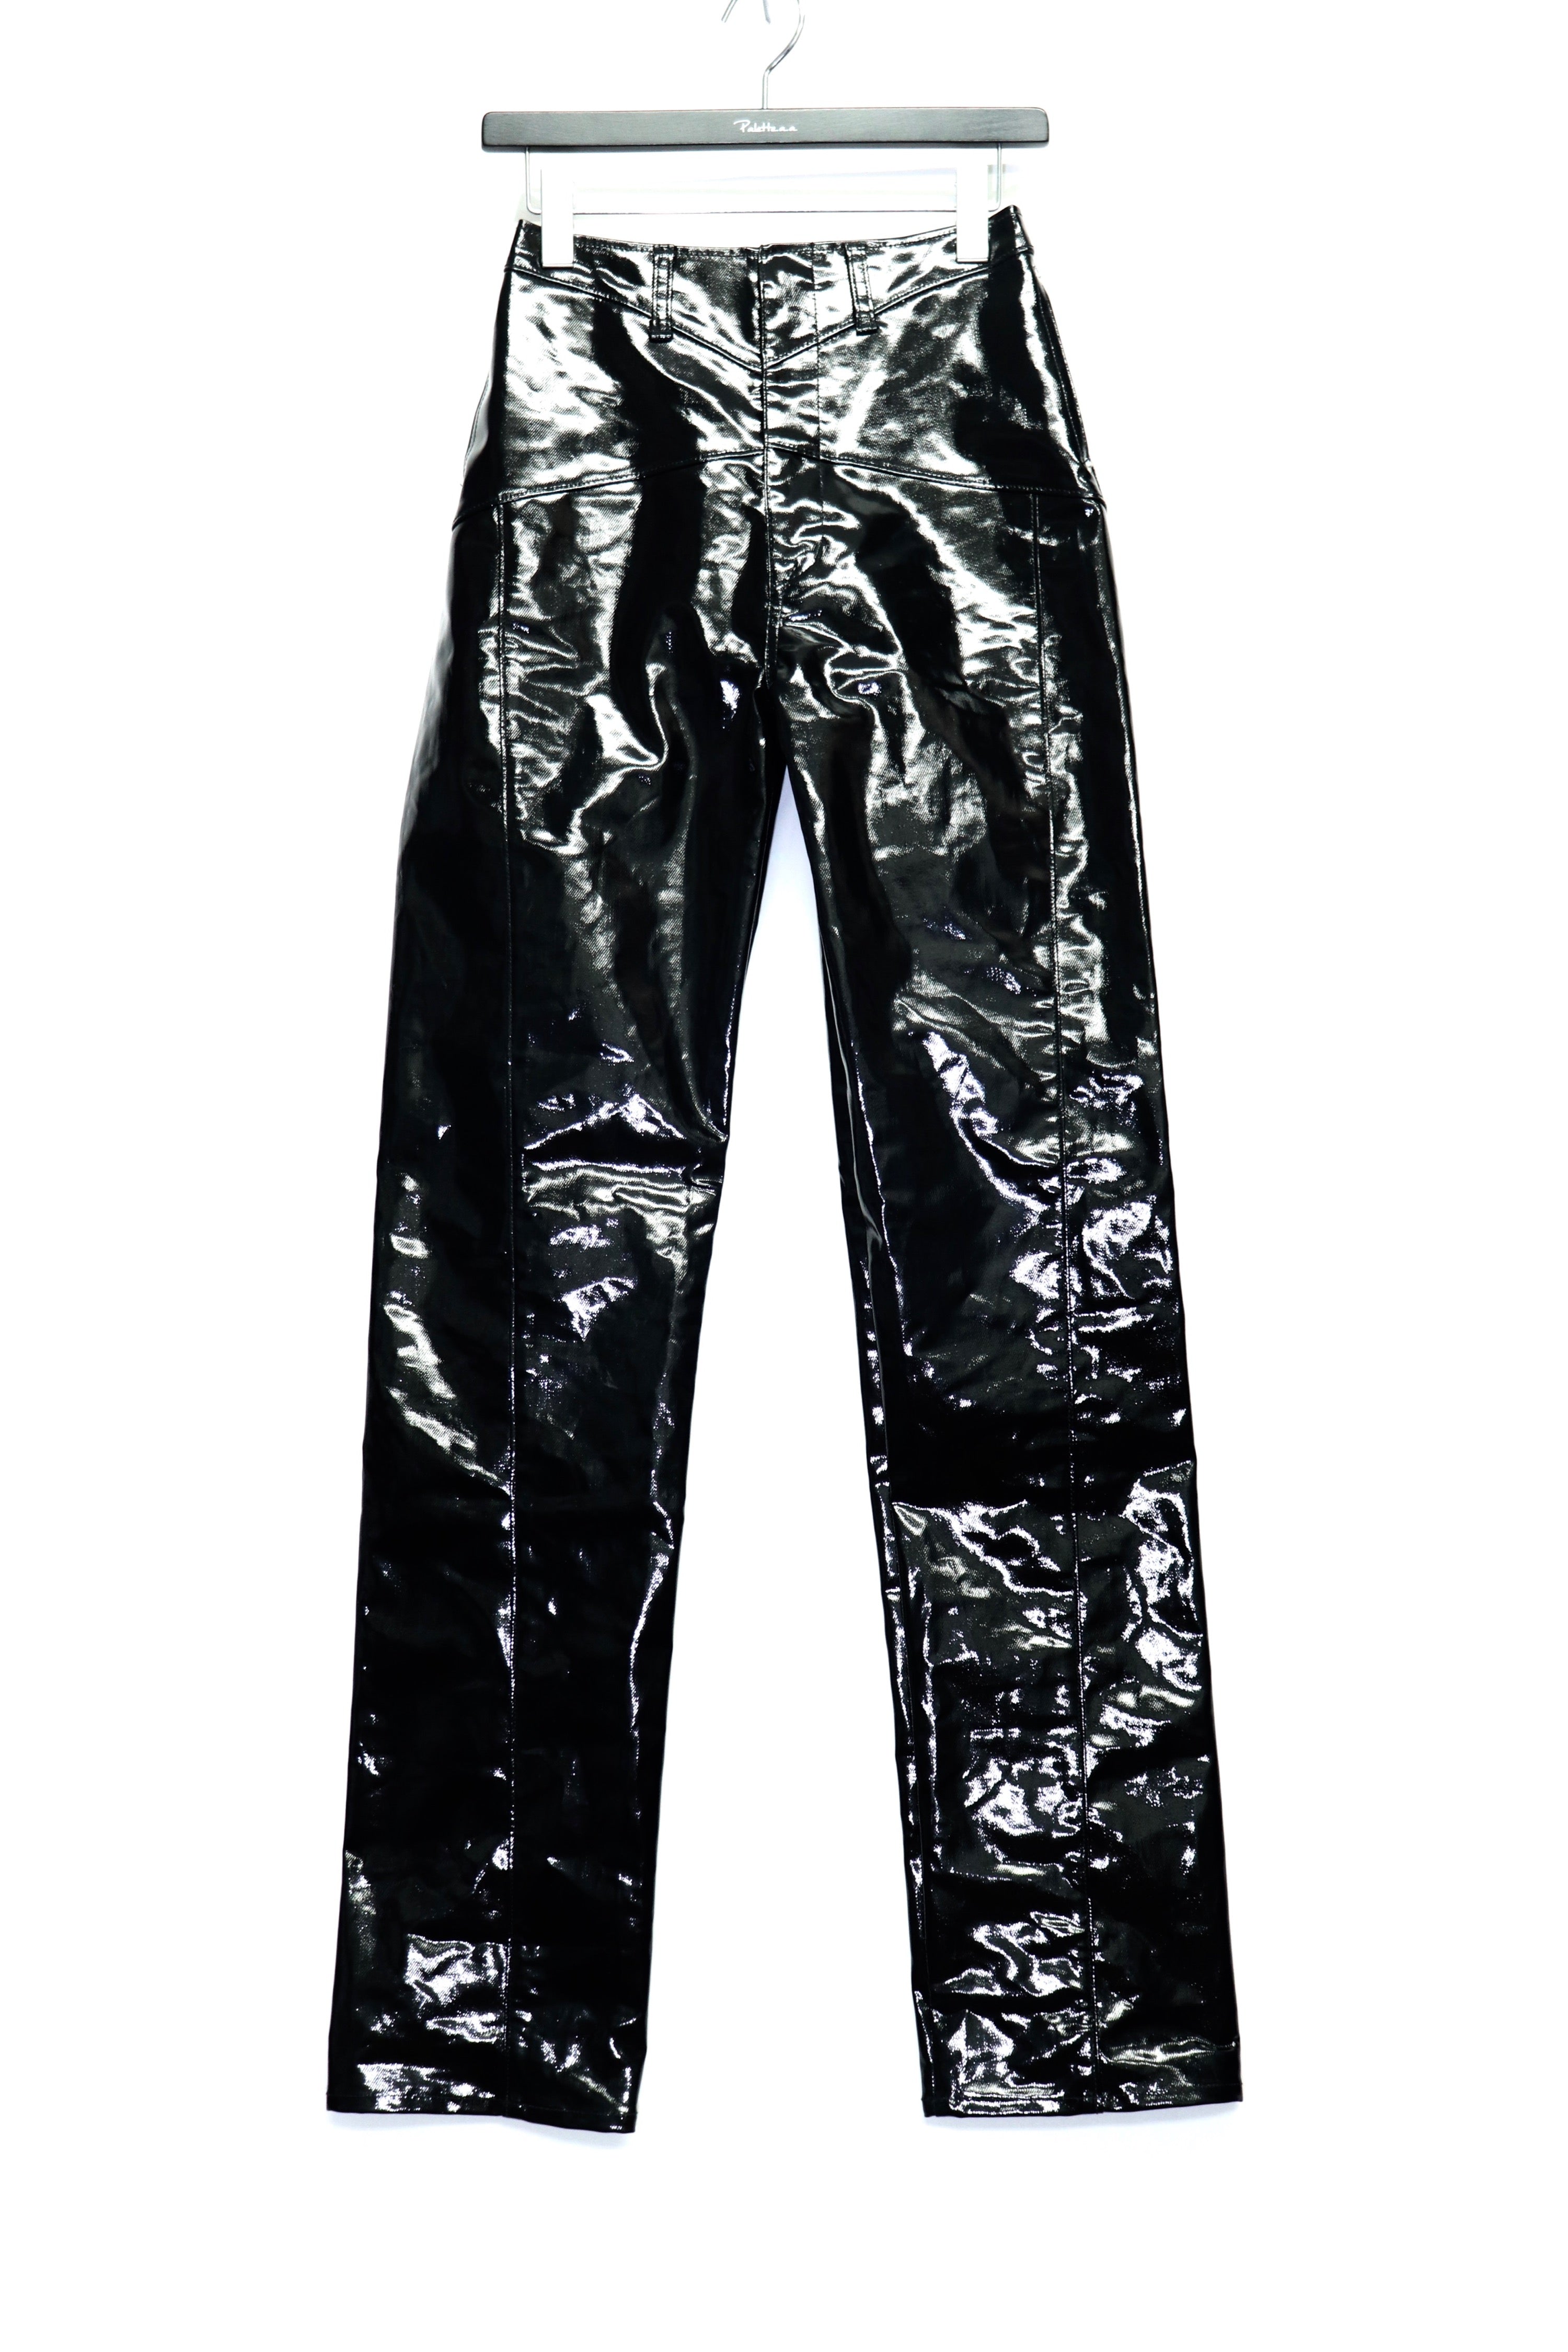 FETICO's HIGHRISE PVC Denim Jeans (denim) mail order | Palette Art